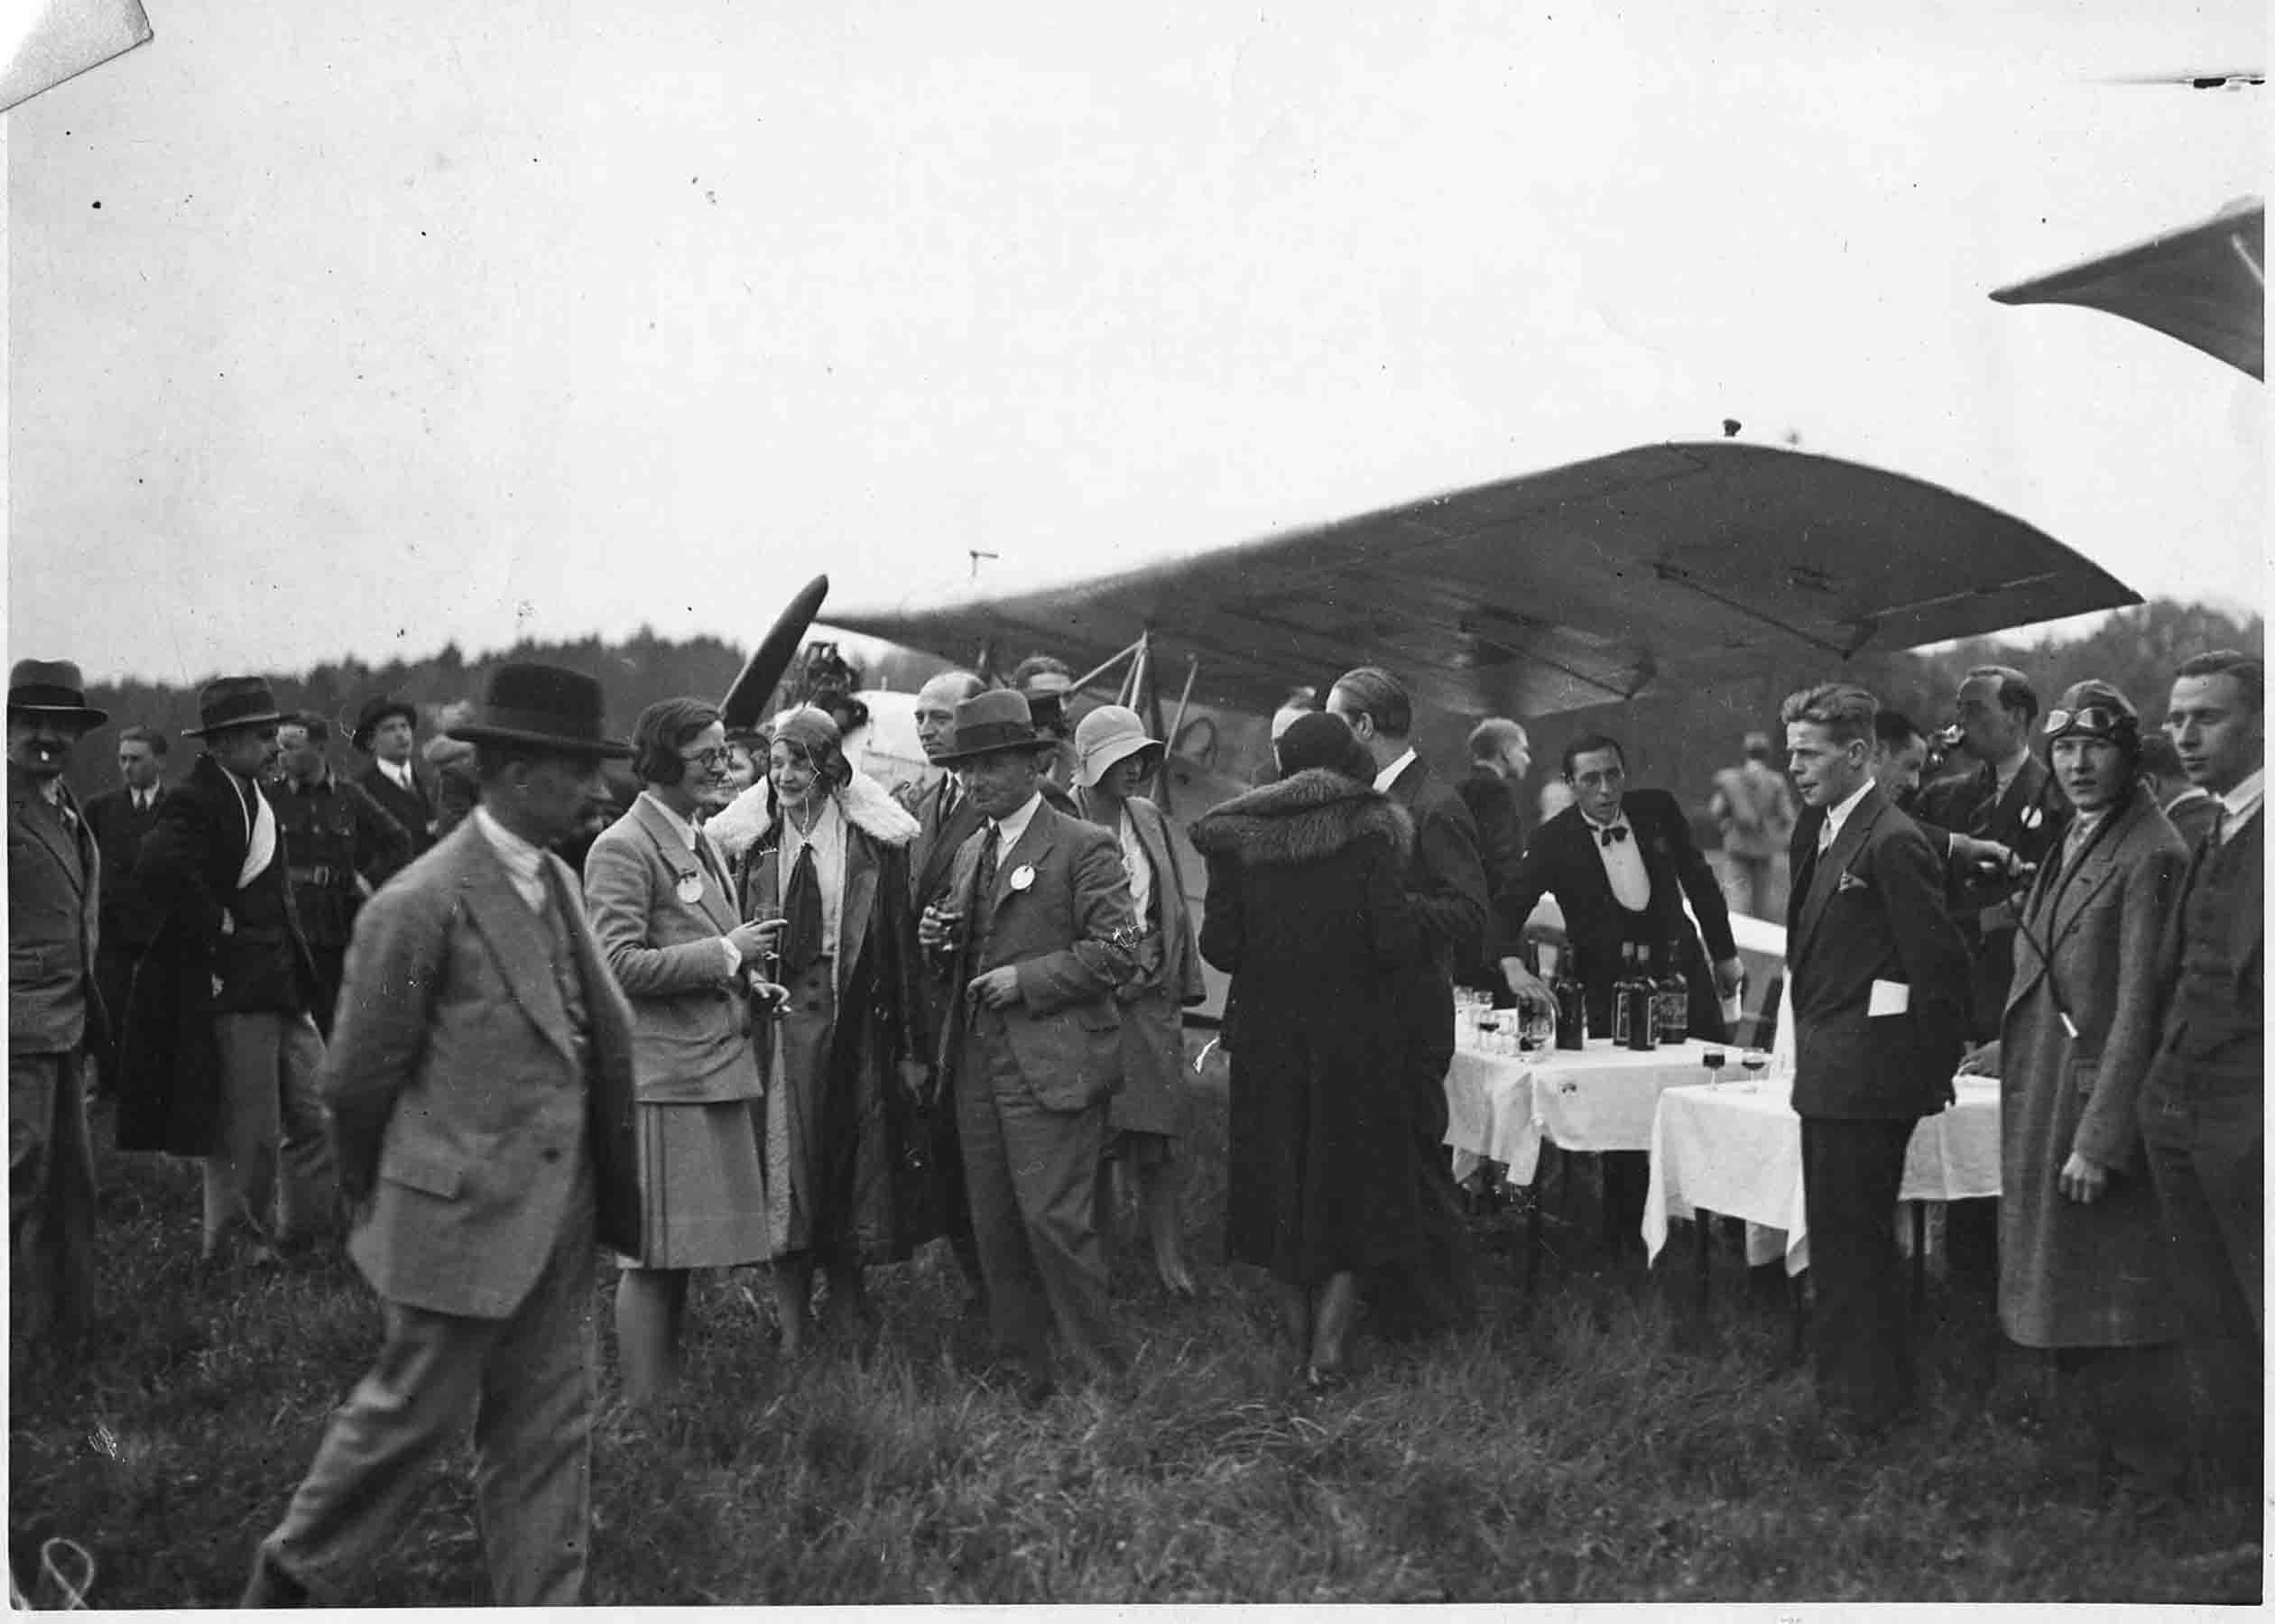 Rallye Aerien Chateau d'Ardenne 17-19 May 1930 Susan Slade